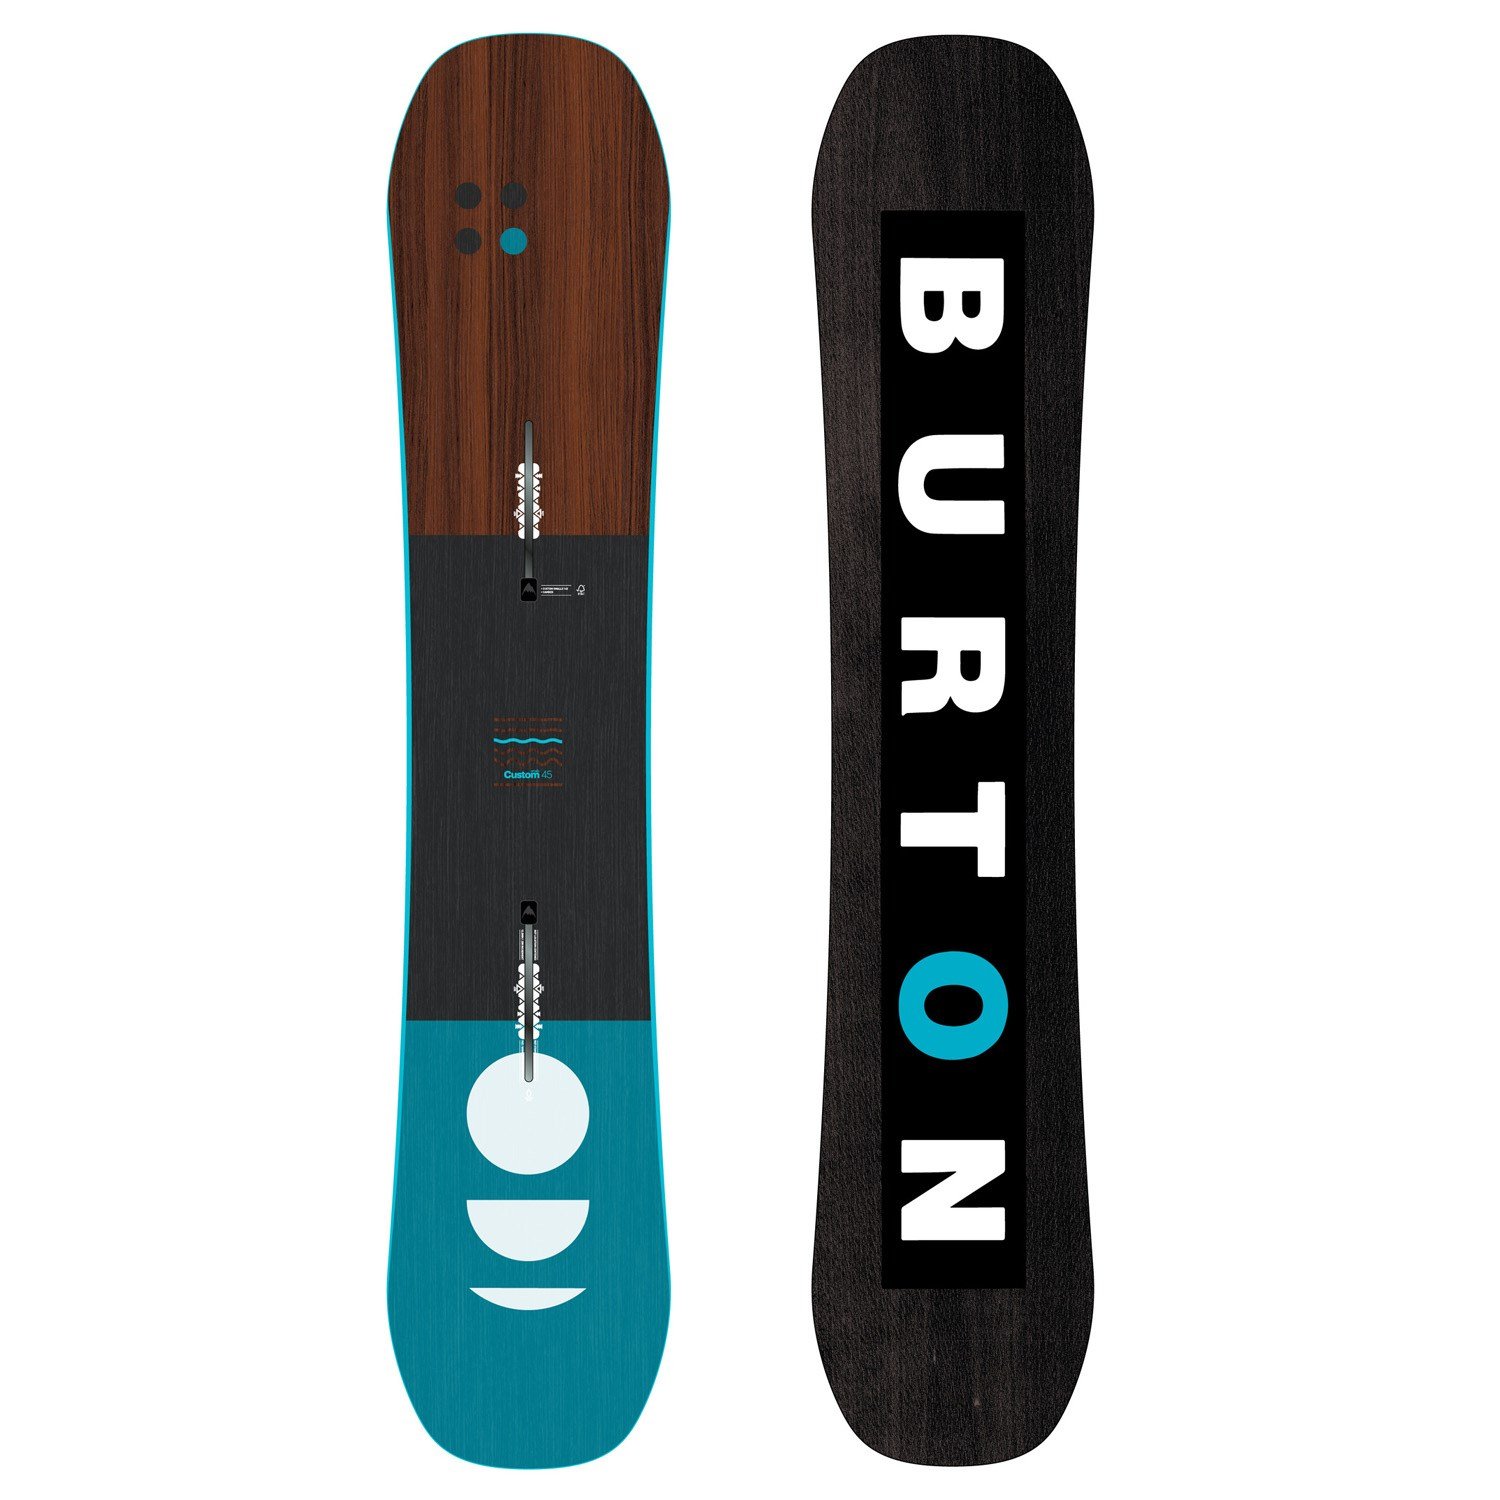 Crueldad persuadir doce Burton Custom Smalls Snowboard - Boys' 2019 | evo